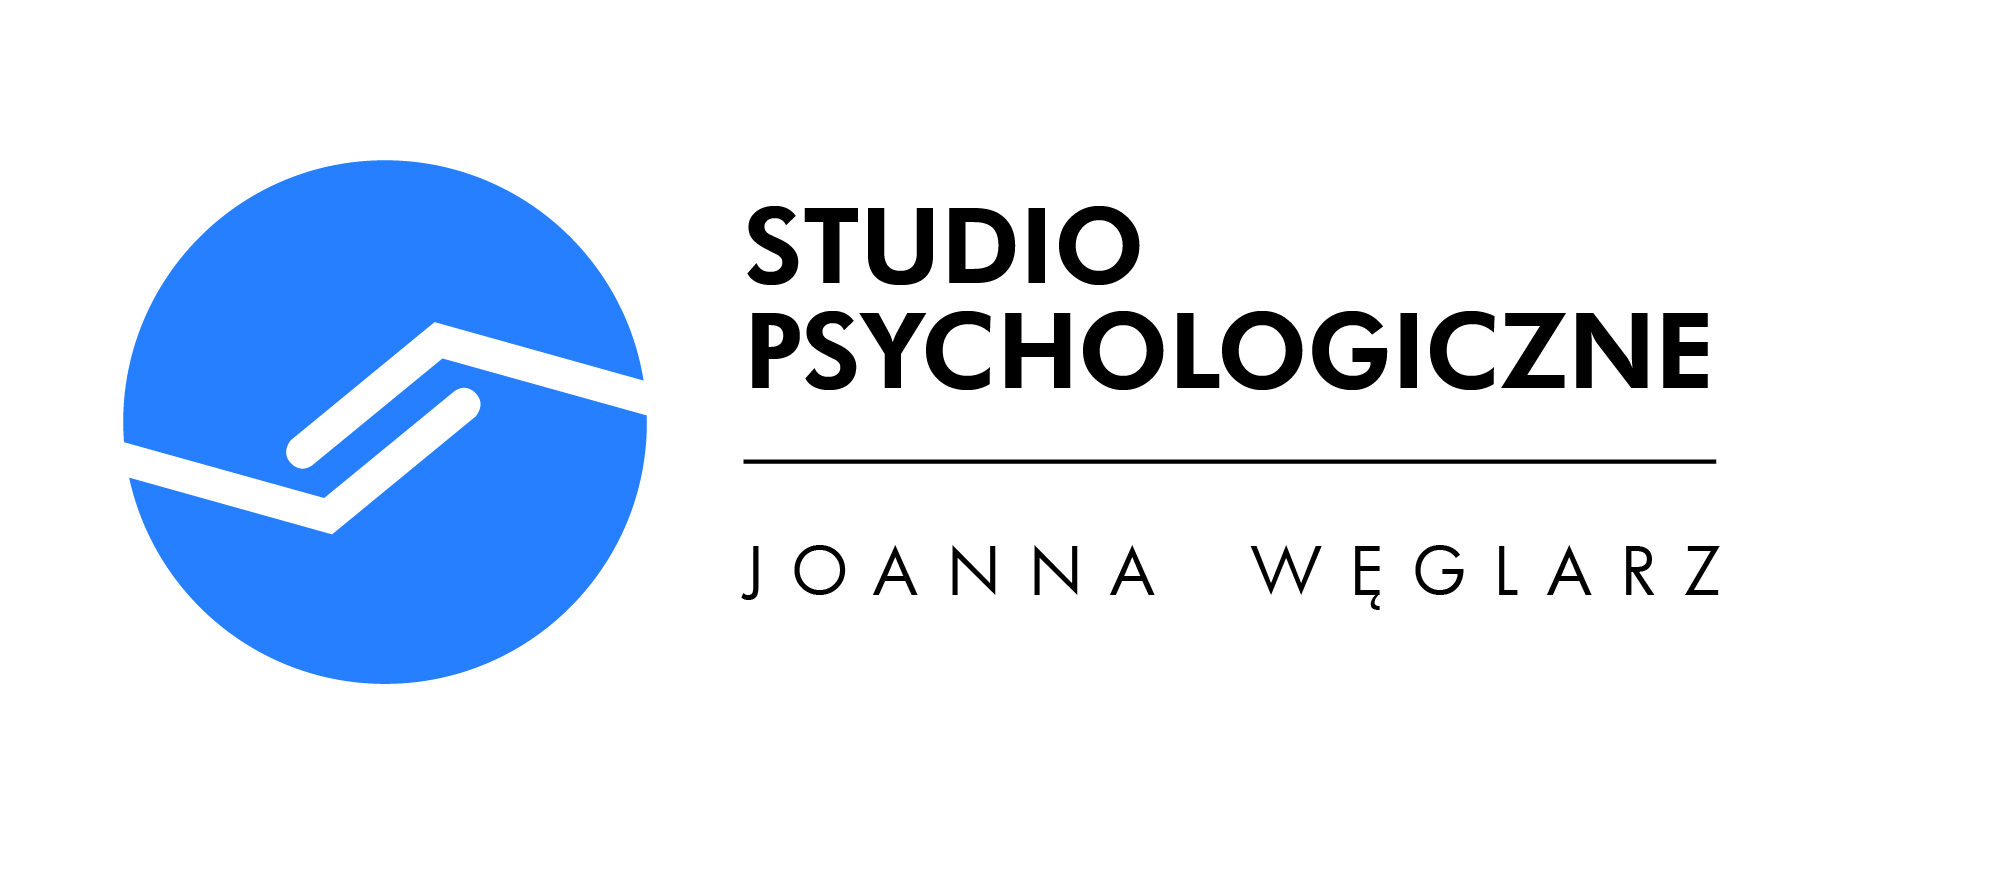 Studio psychologiczne - logo